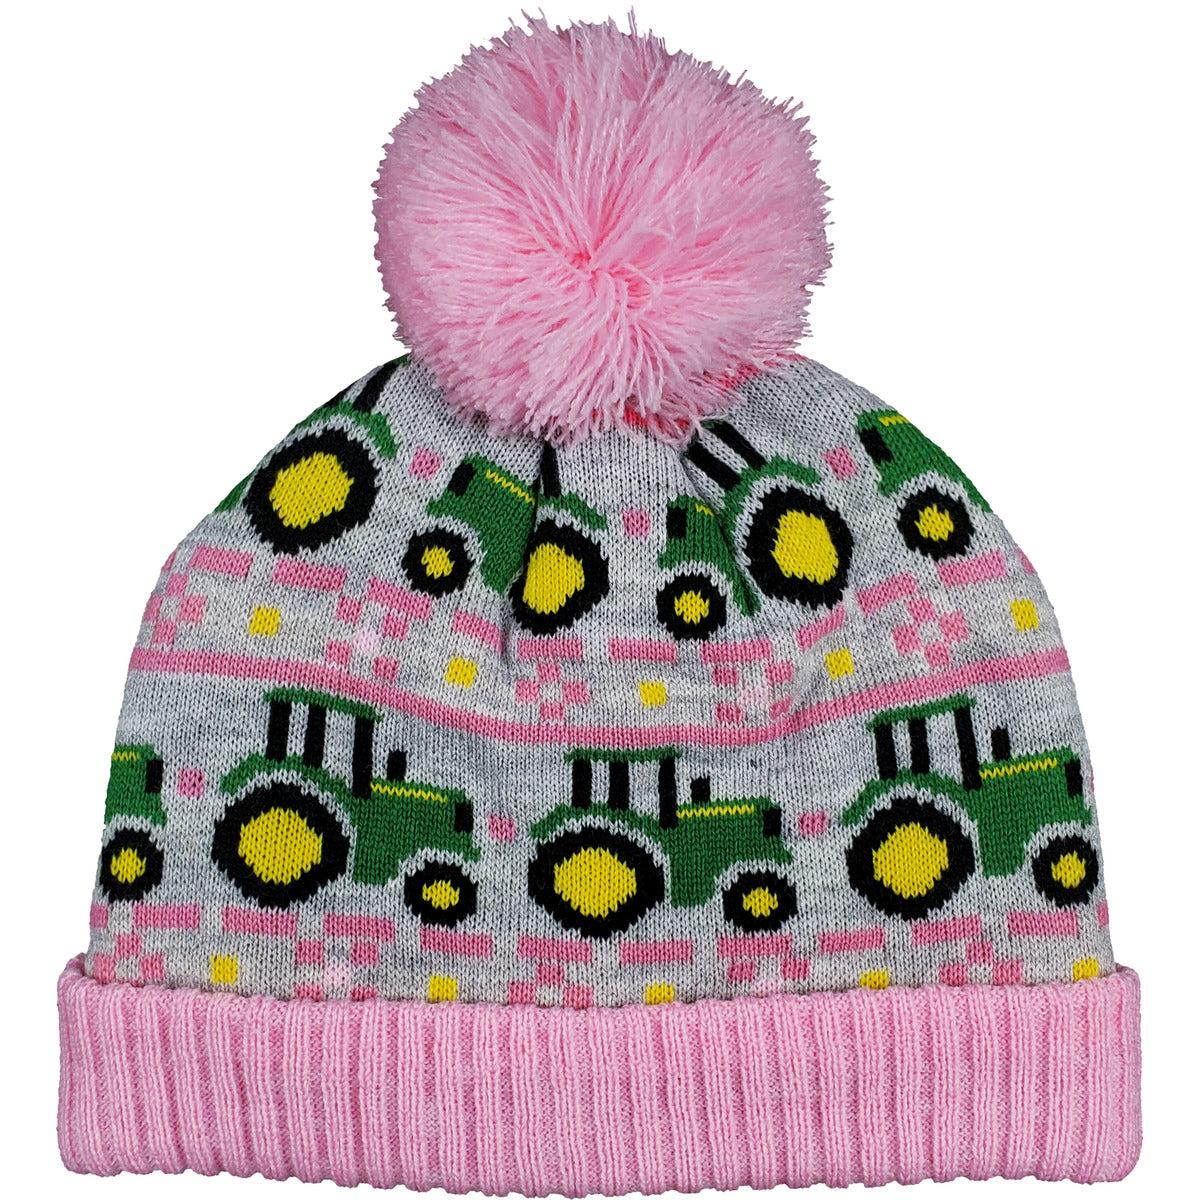 John Deere Toddler Girls' Winter Hat, Soft Pink - LP77236